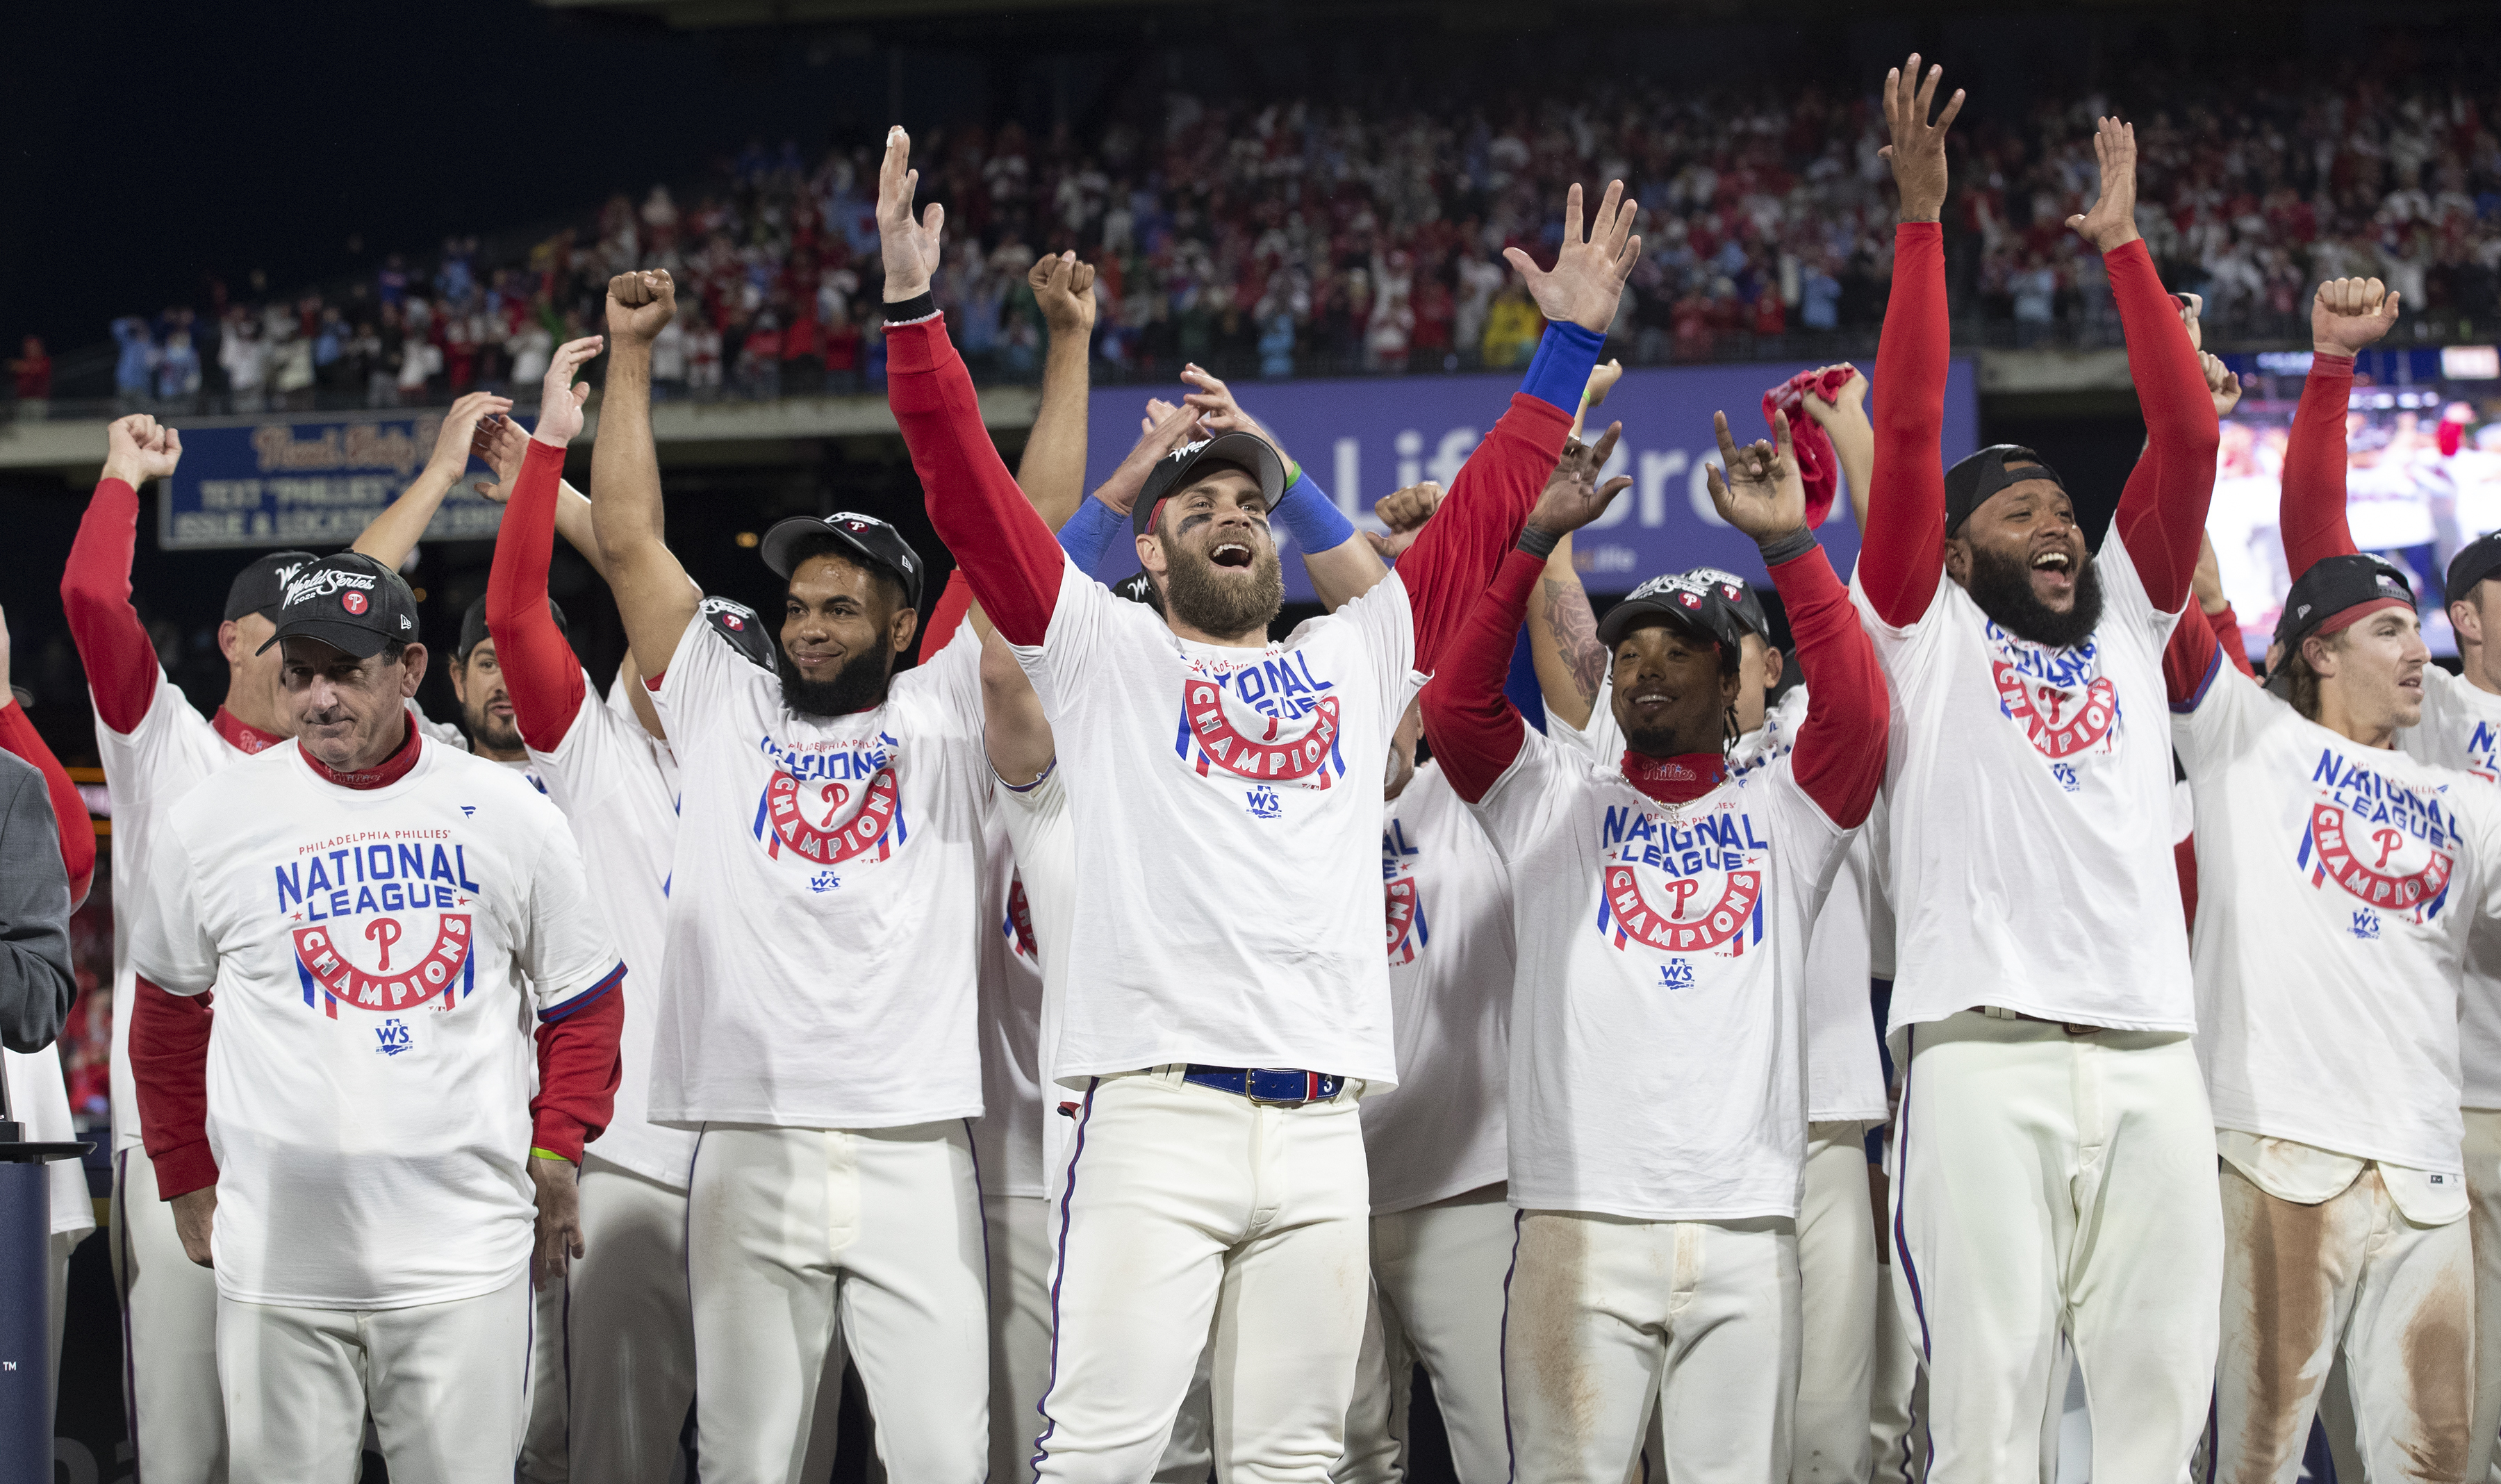 Ryan Howard: Bryce Harper's 'growth' helped Phillies reach World